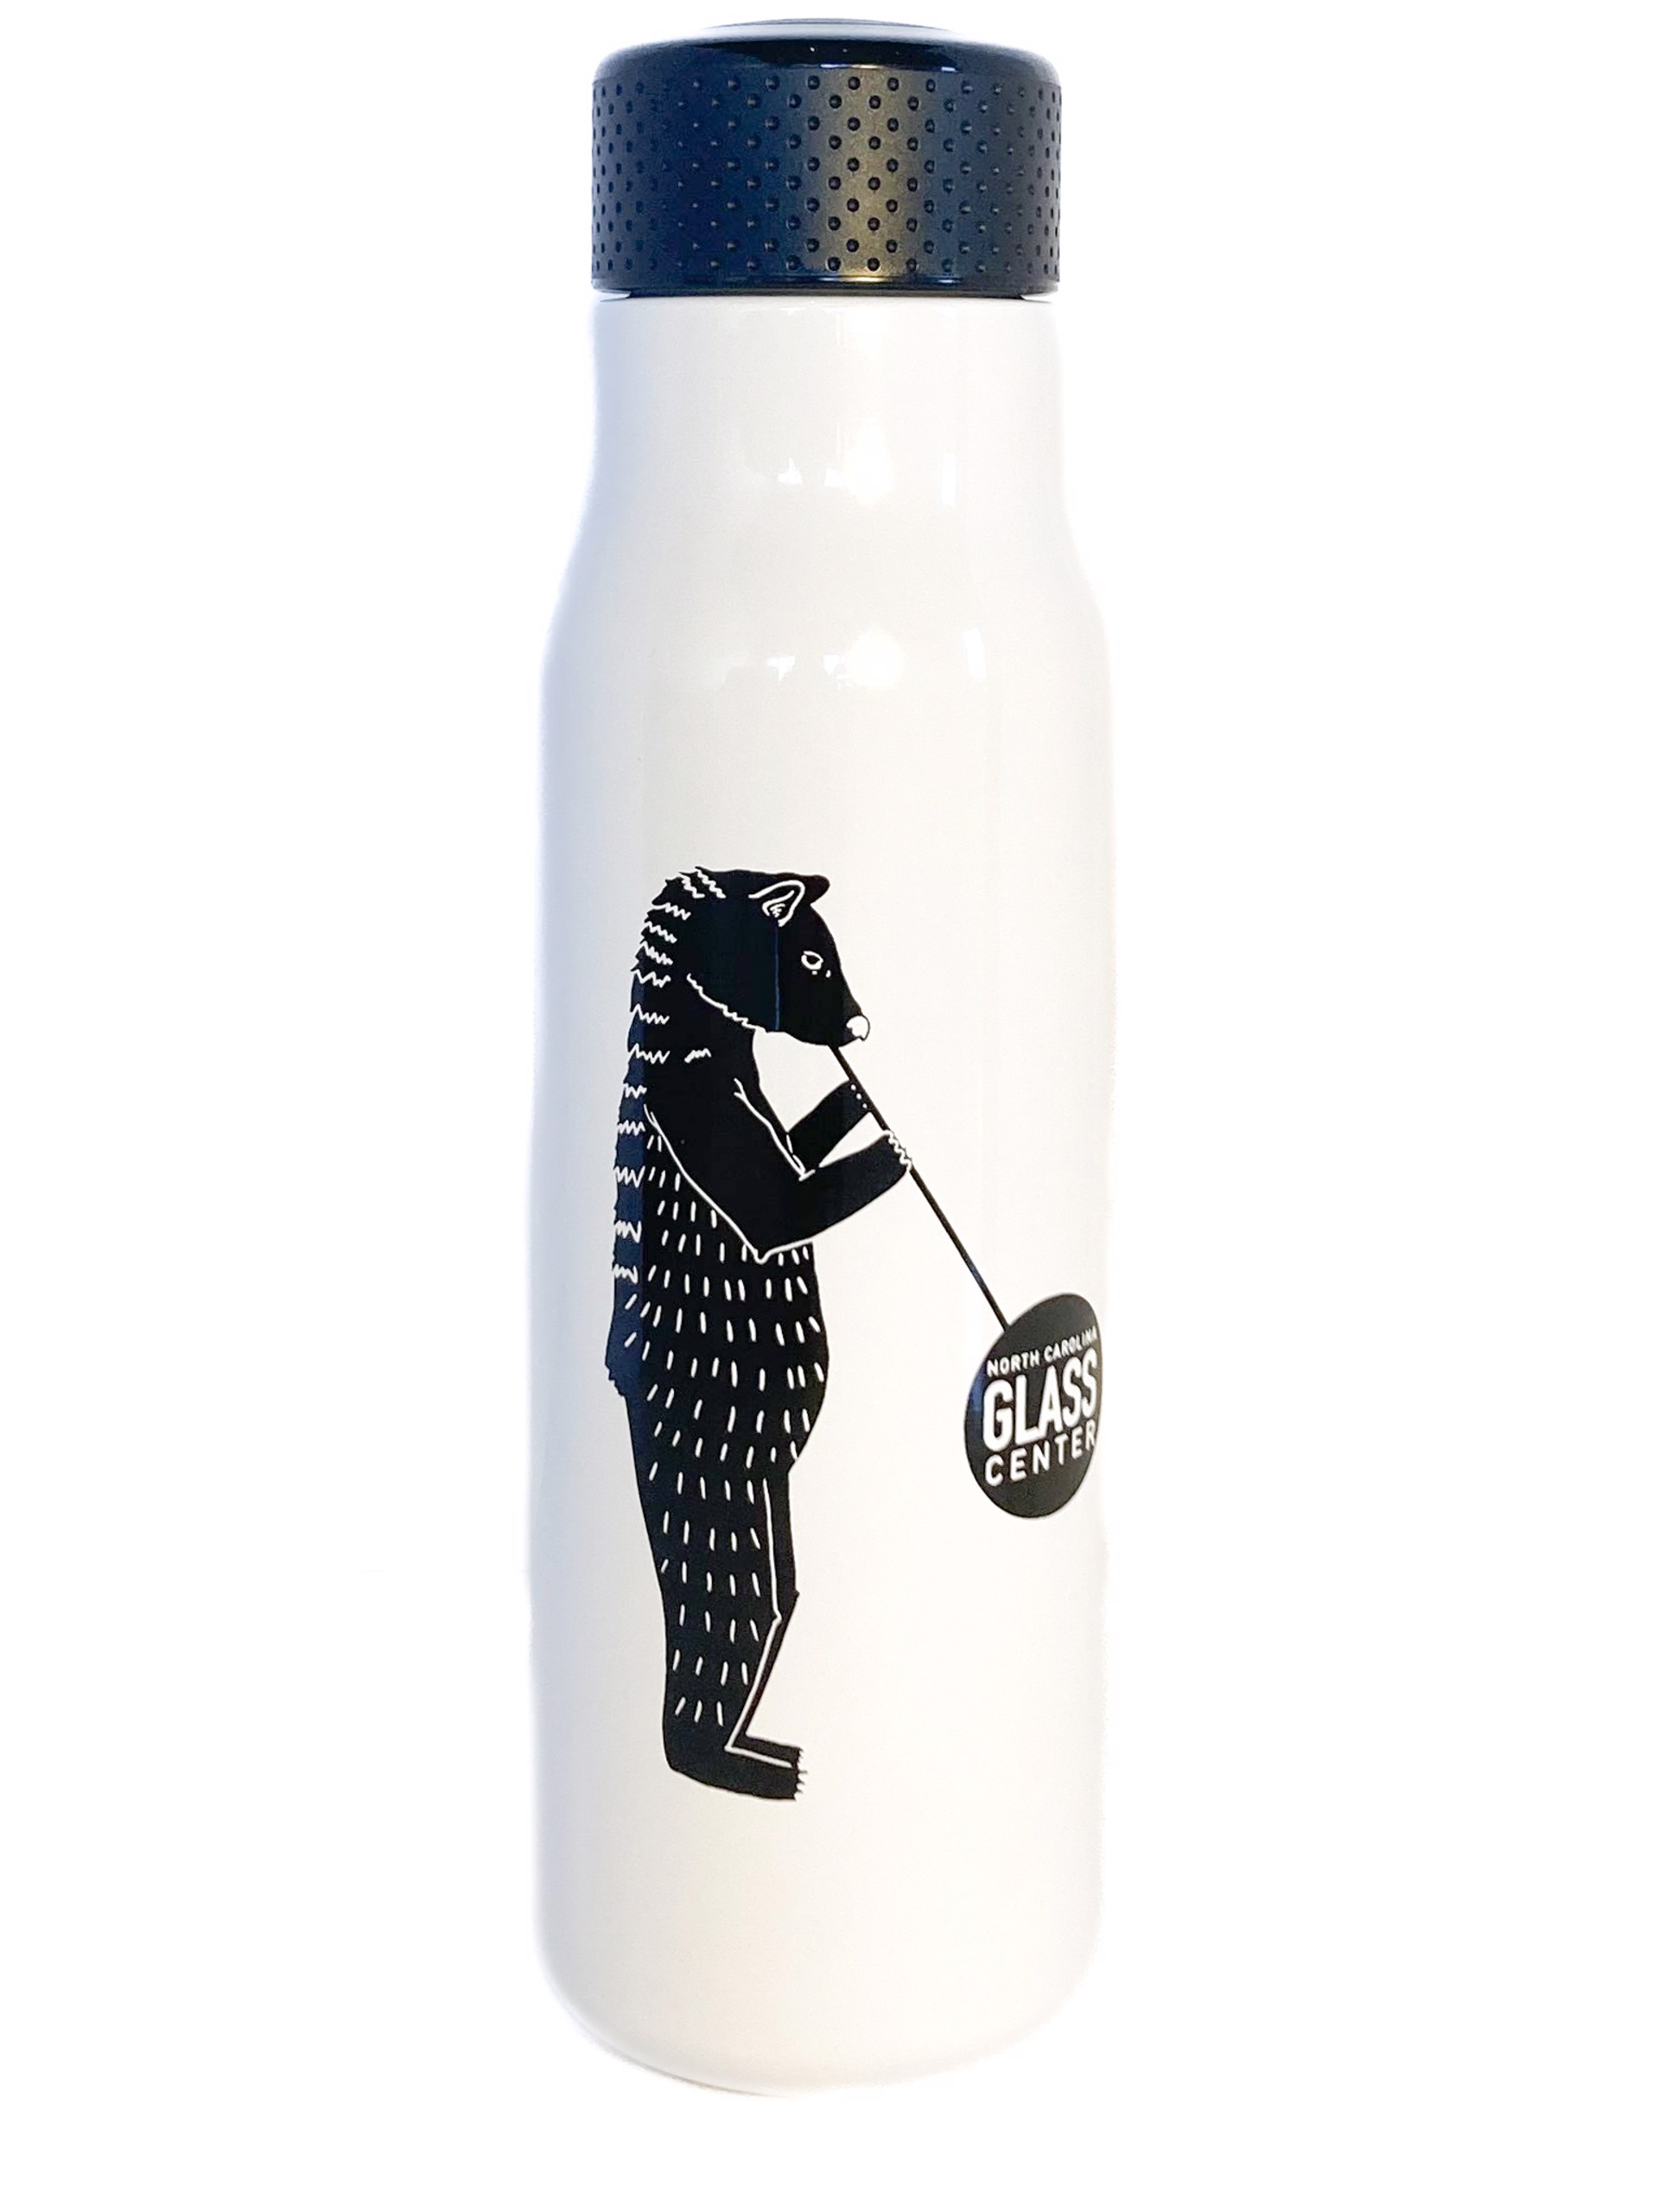 NCGC Water Bottle by NCGC